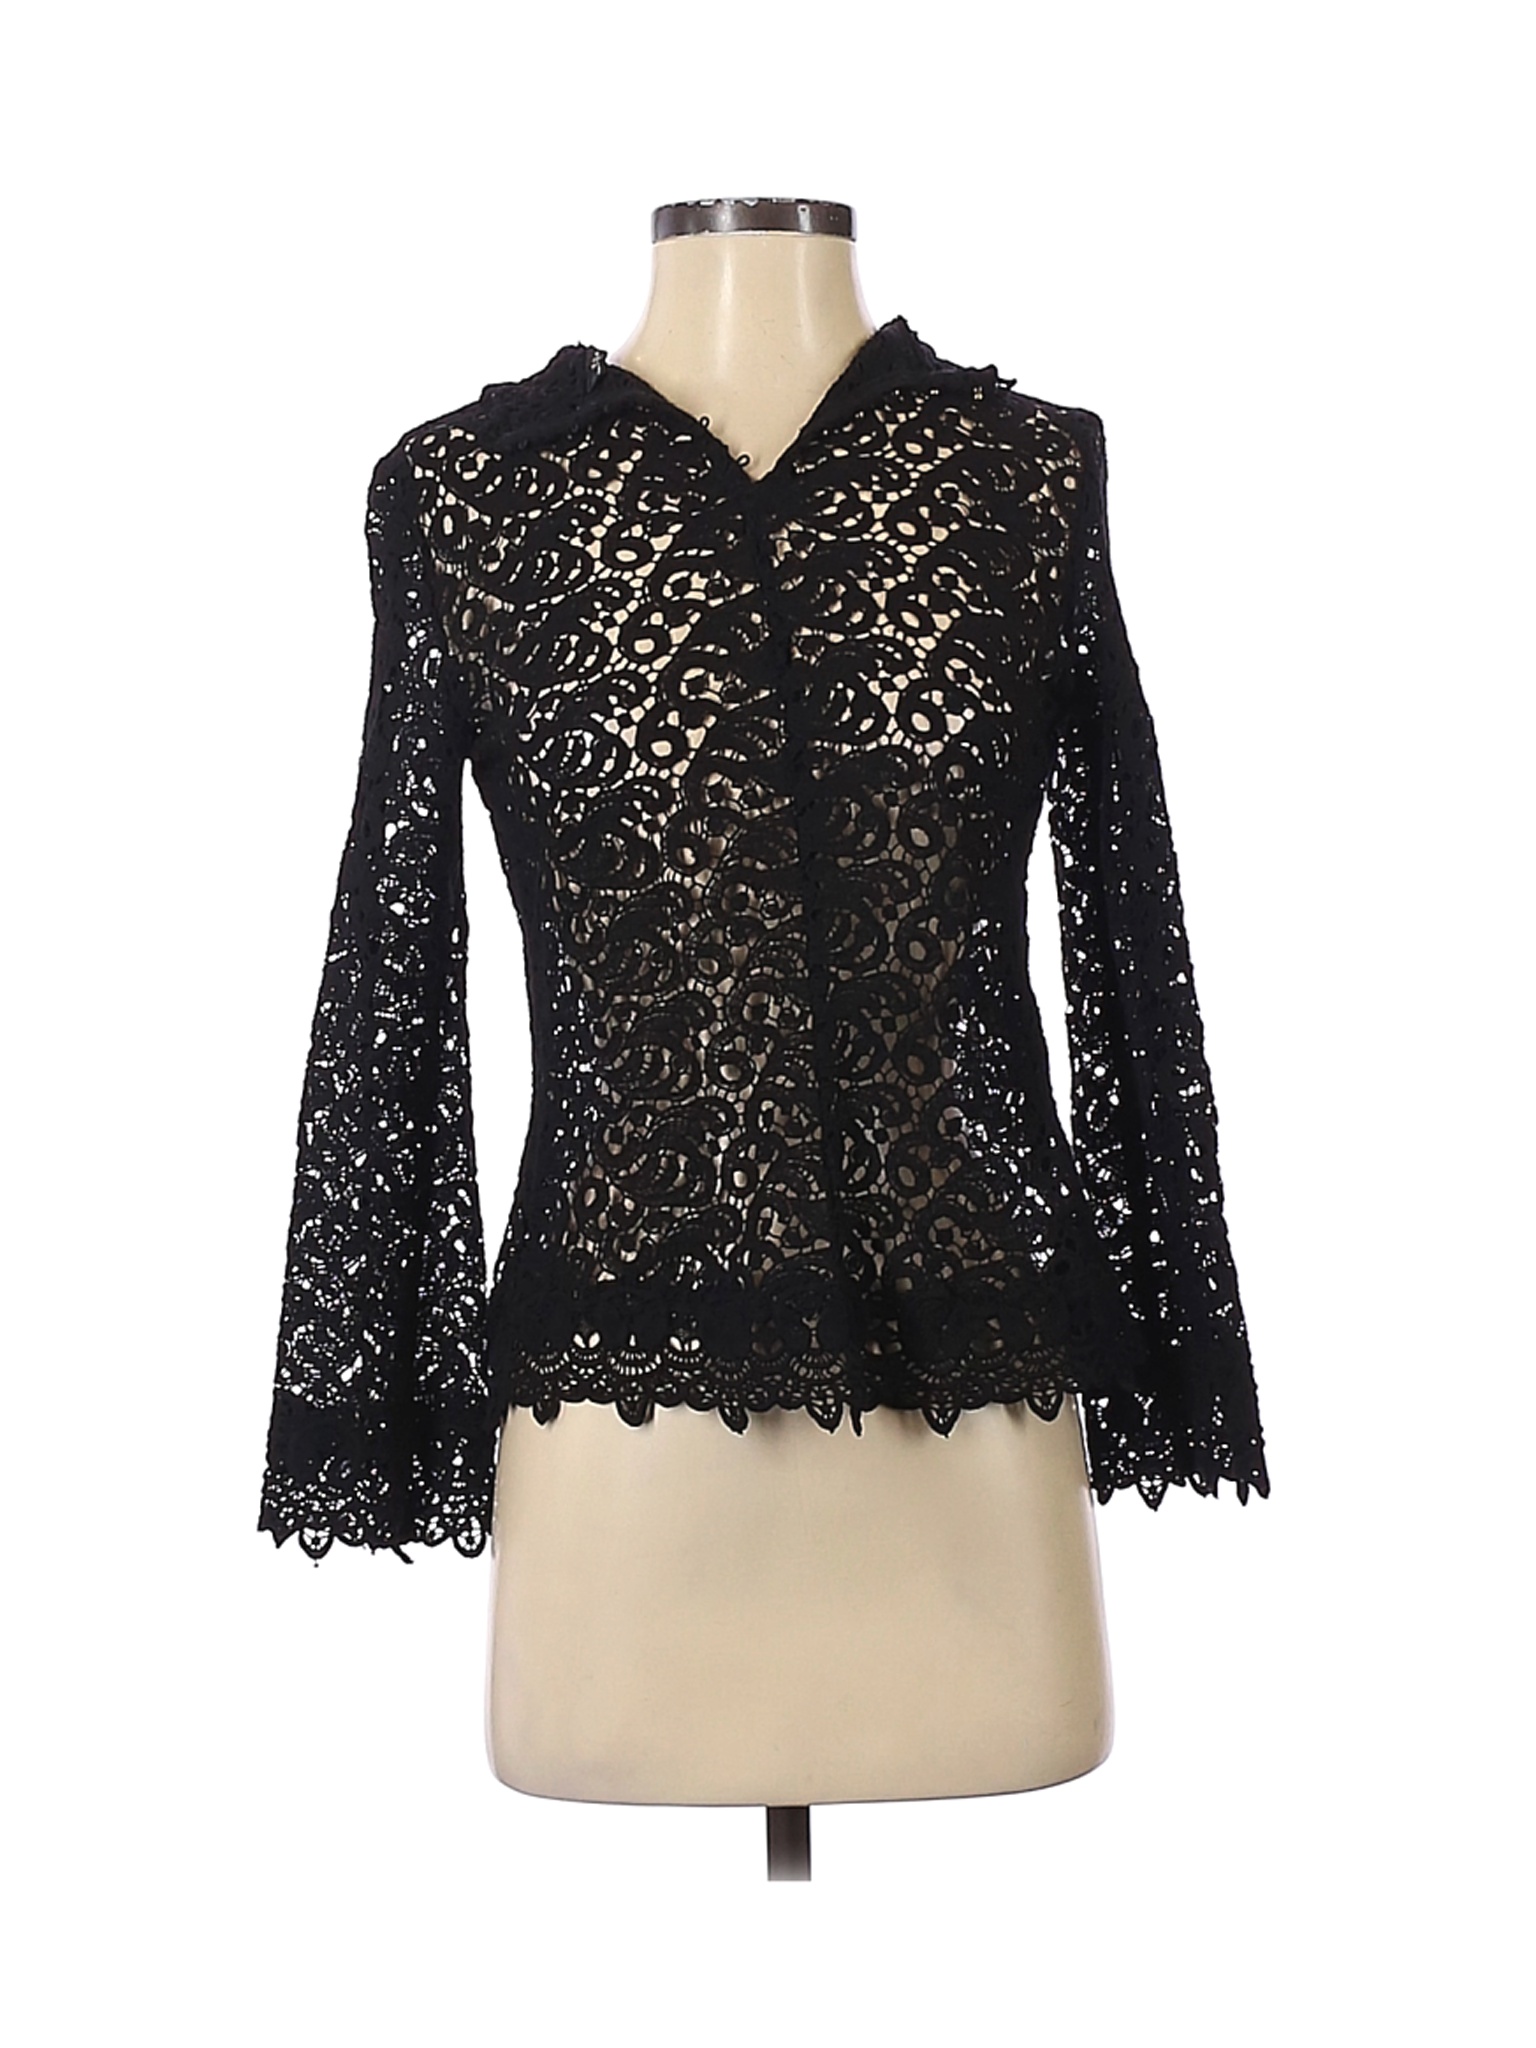 Zara Women Black Long Sleeve Blouse S | eBay